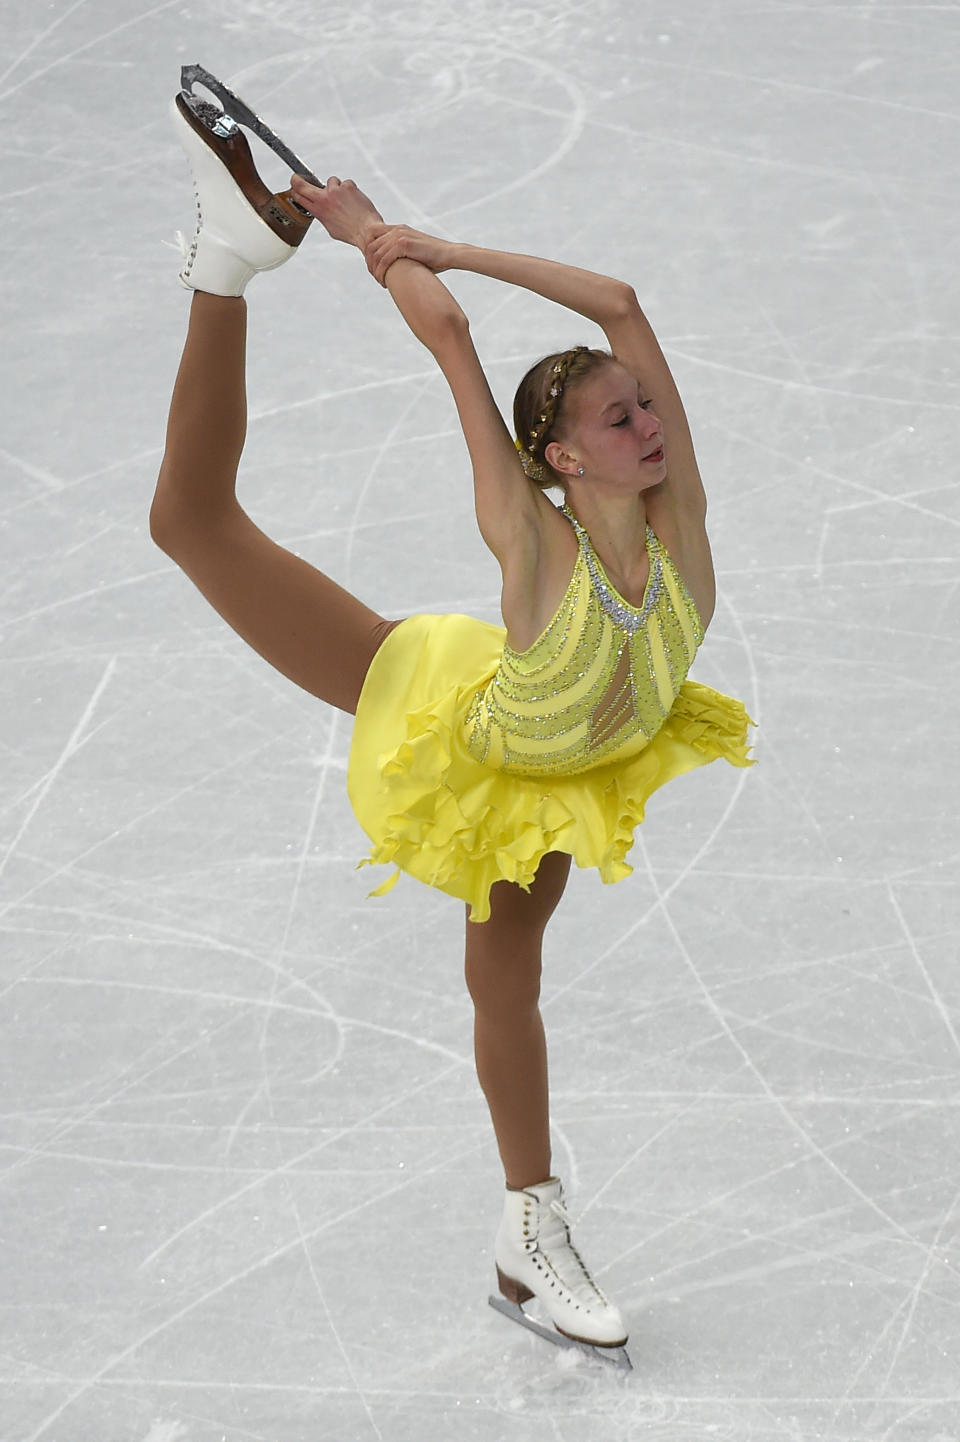 Polina Edmunds: 2014 Sochi